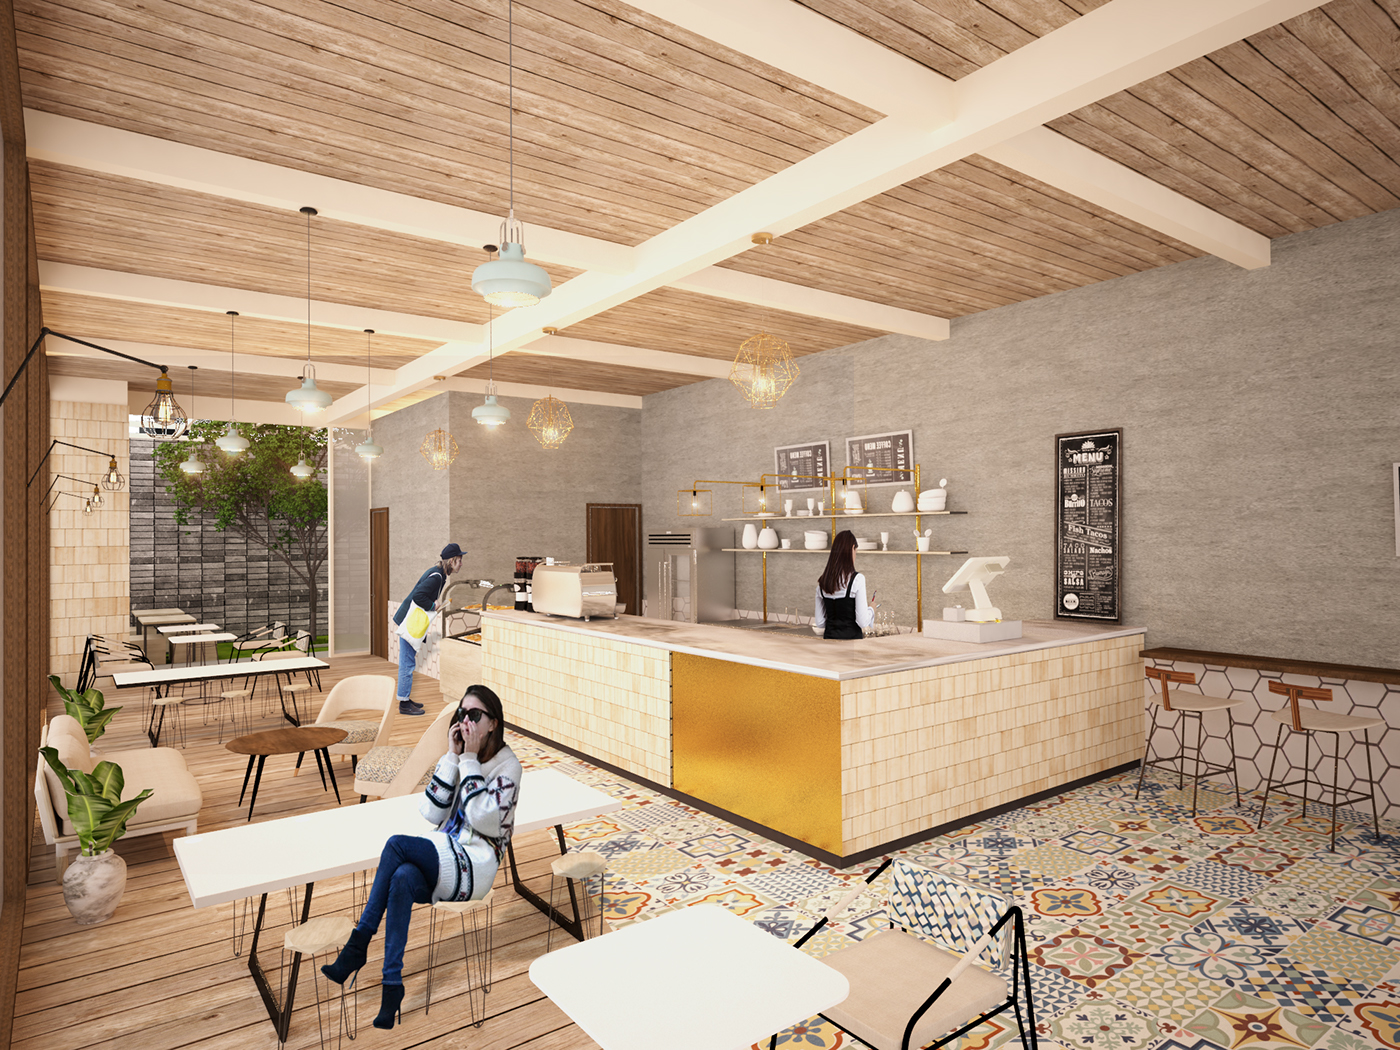 interiordesign cafe Render coffeeshop 3dvisualizer 3DArtist designer artwork Retail Hospitality